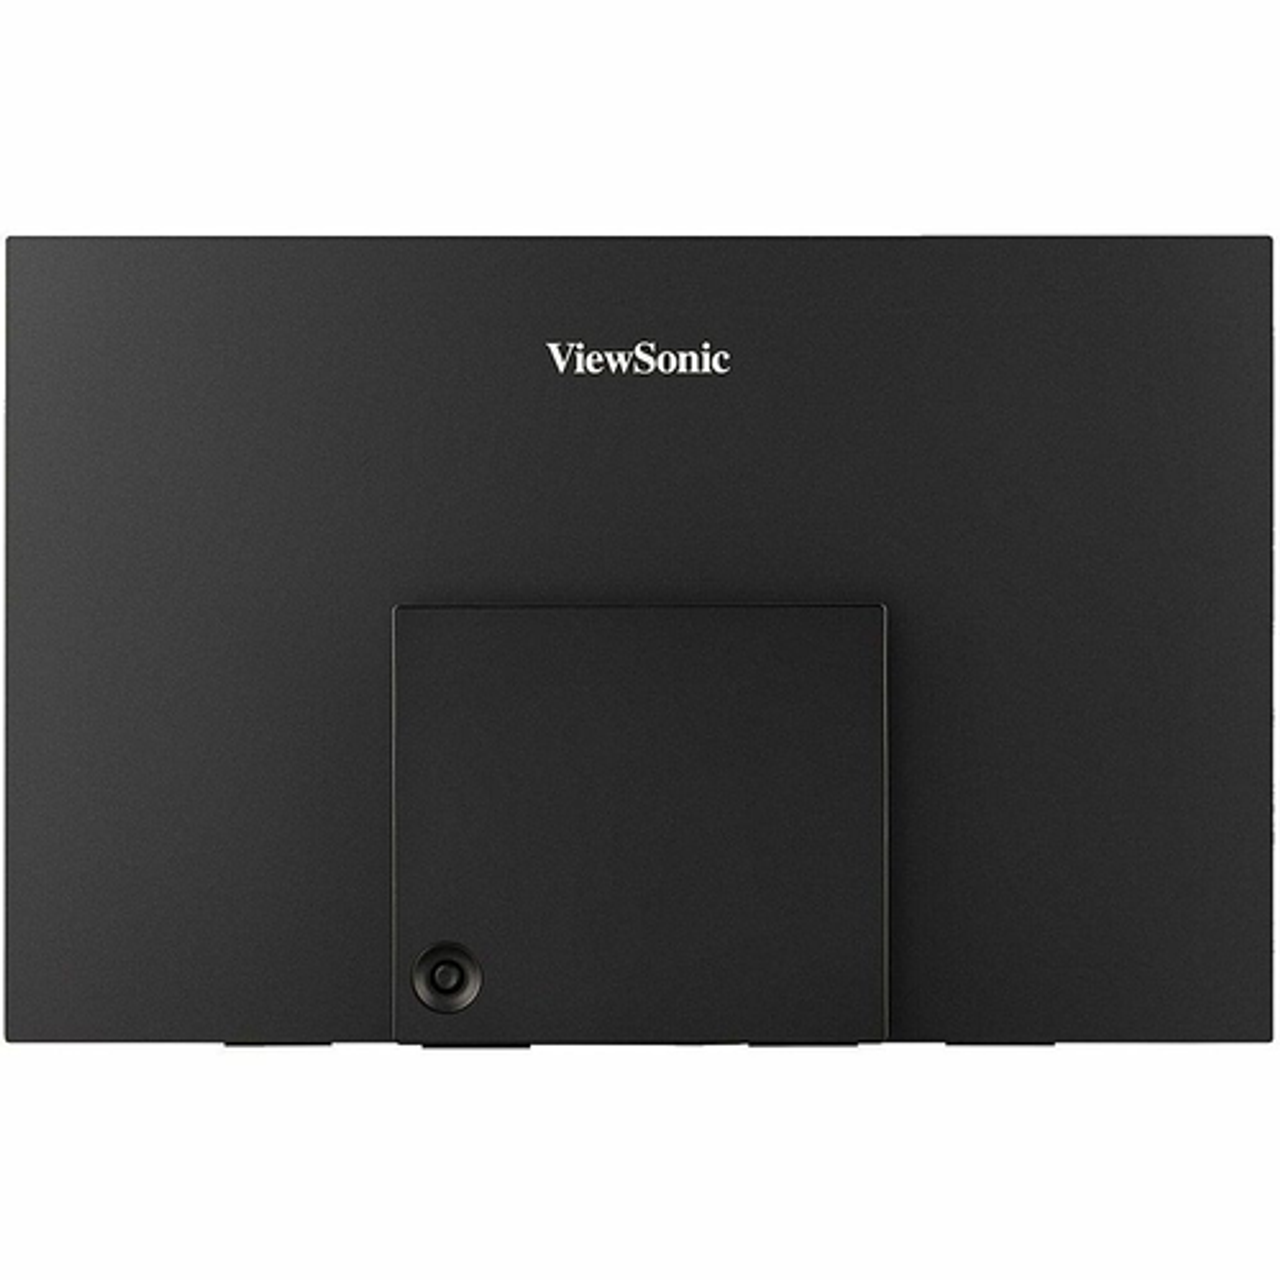 ViewSonic - VX1655 - 15.6" 1080p Portable Monitor with 60W USB C and mini HDMI - Black